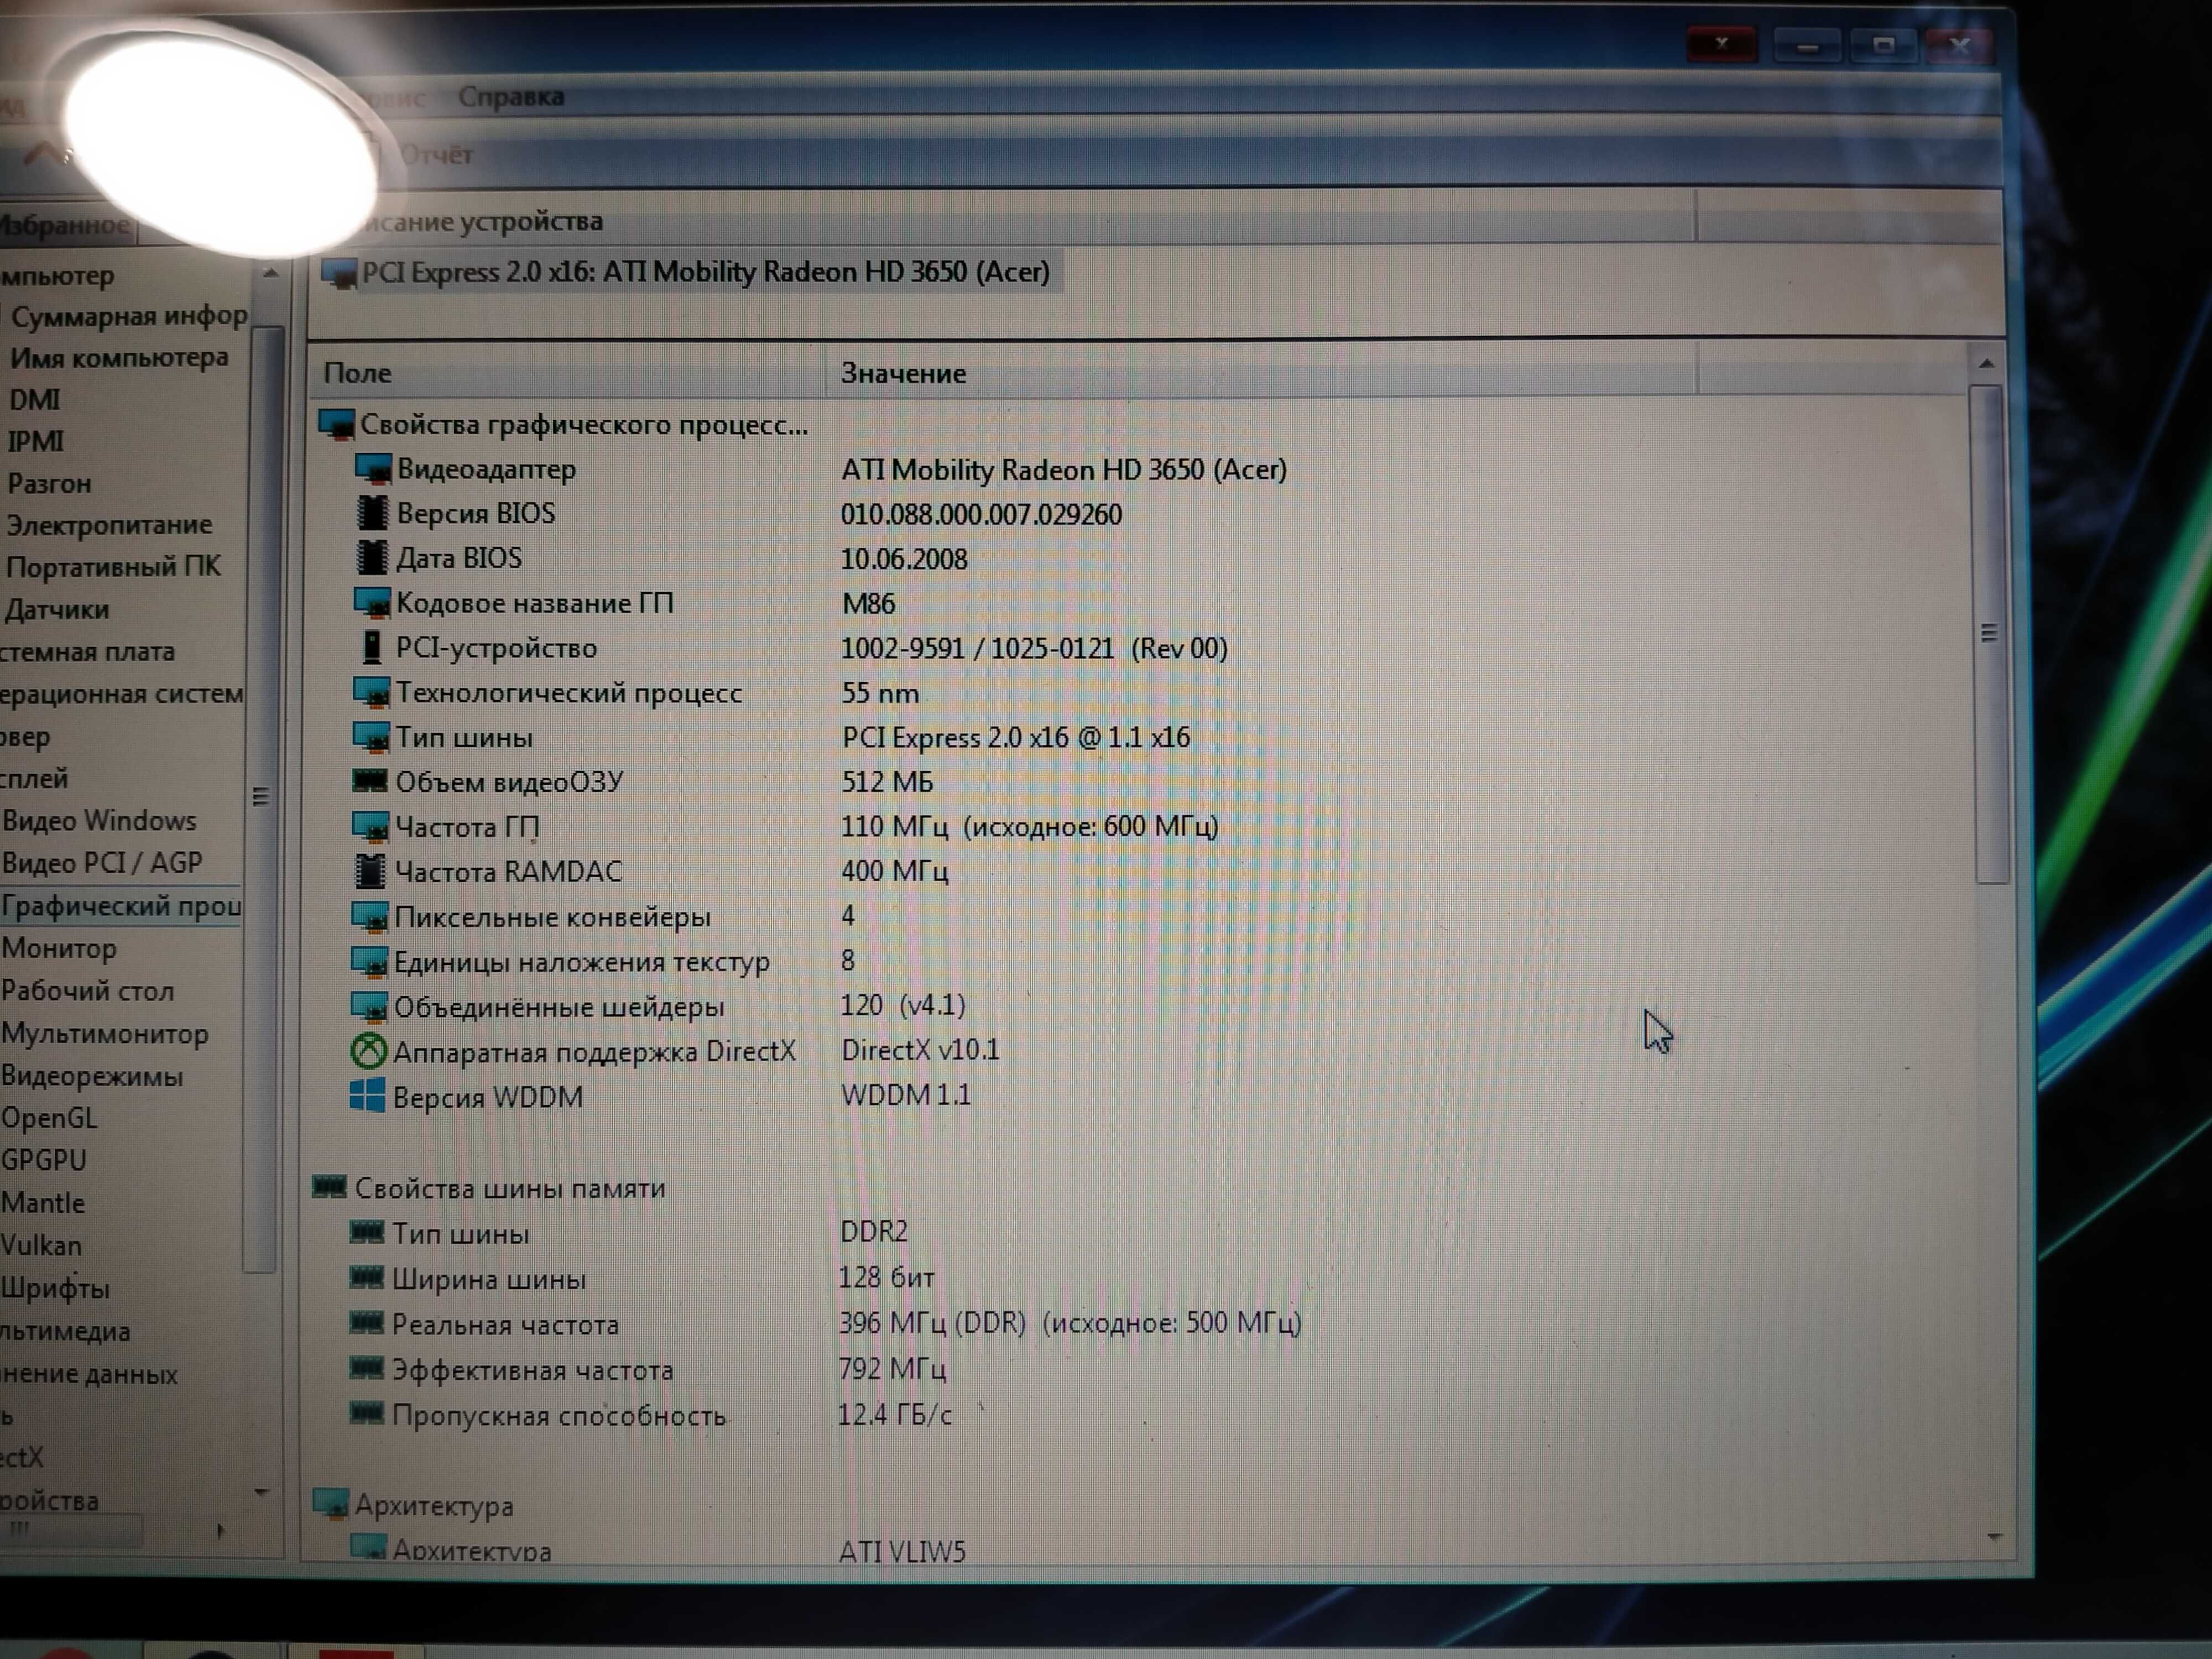 Продам ноутбук Acer 5920 с топ Intel Core 2 Duo T9300 2.5 GHz. Ram 4Gb